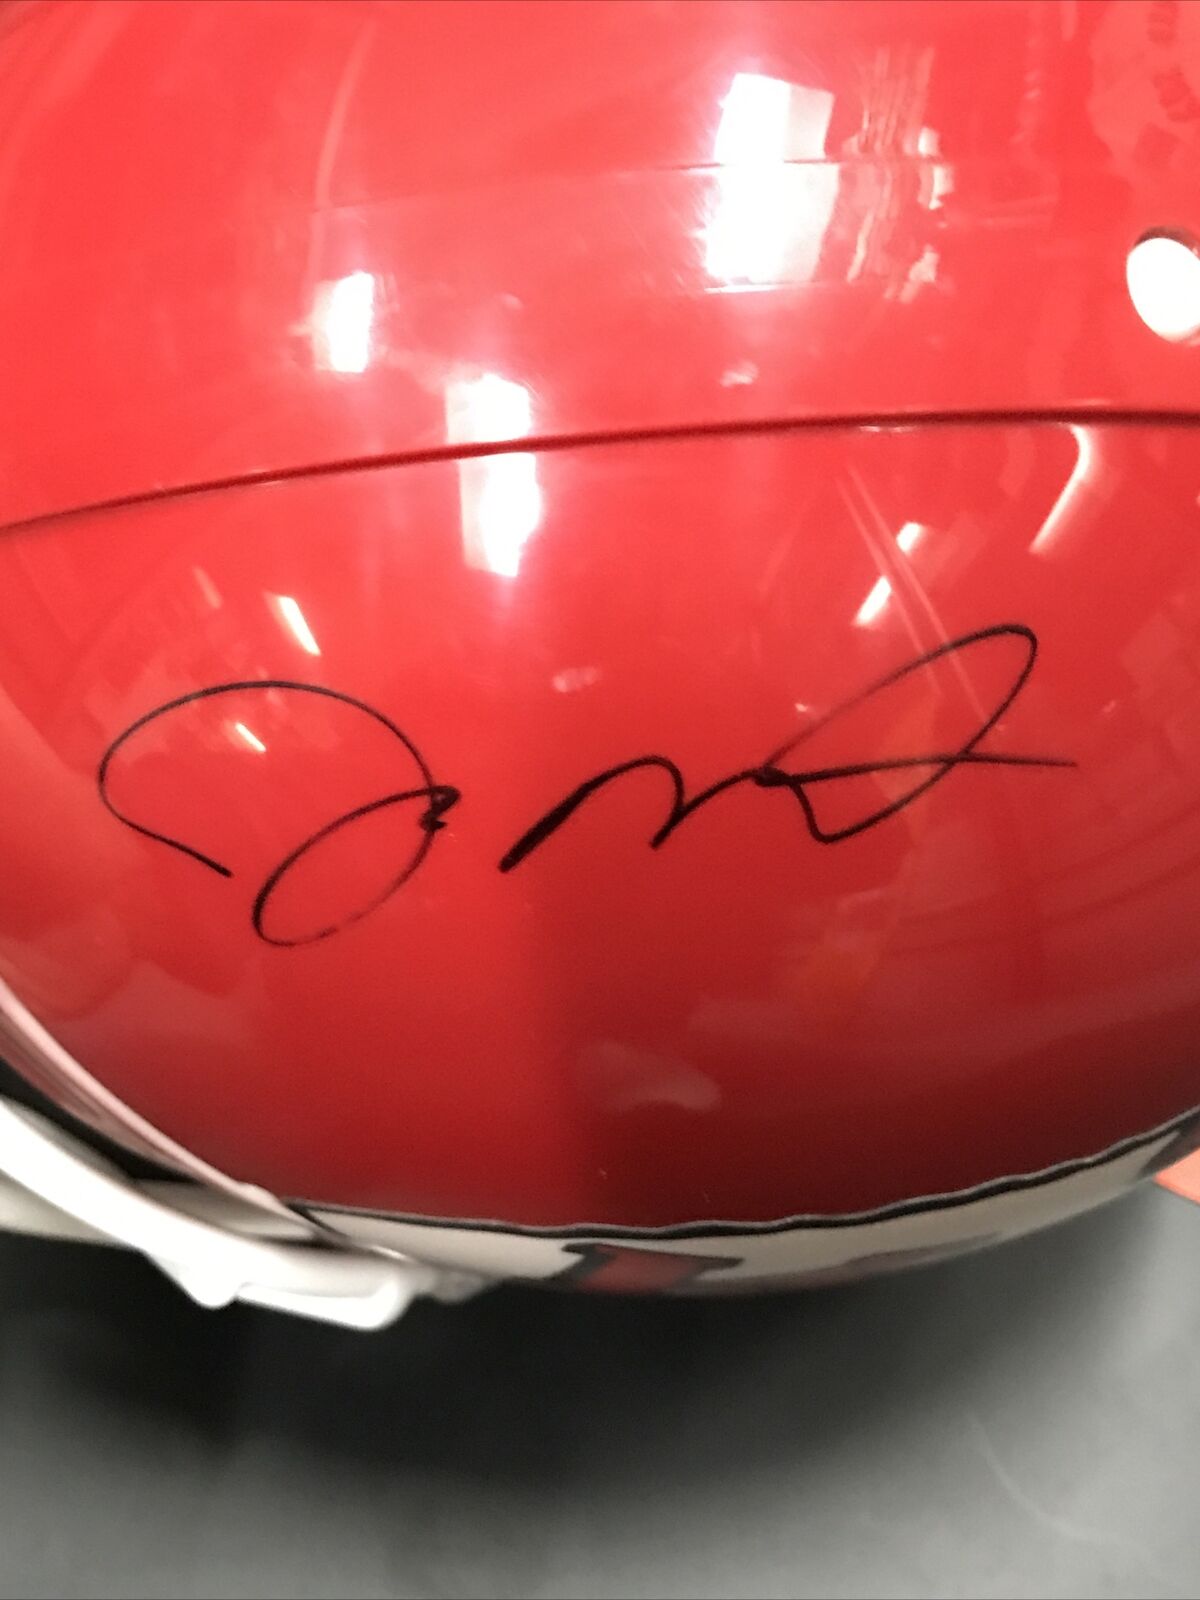 Joe Montana Autographed Full Size KC Chiefs Riddell NFL Helmet With COA